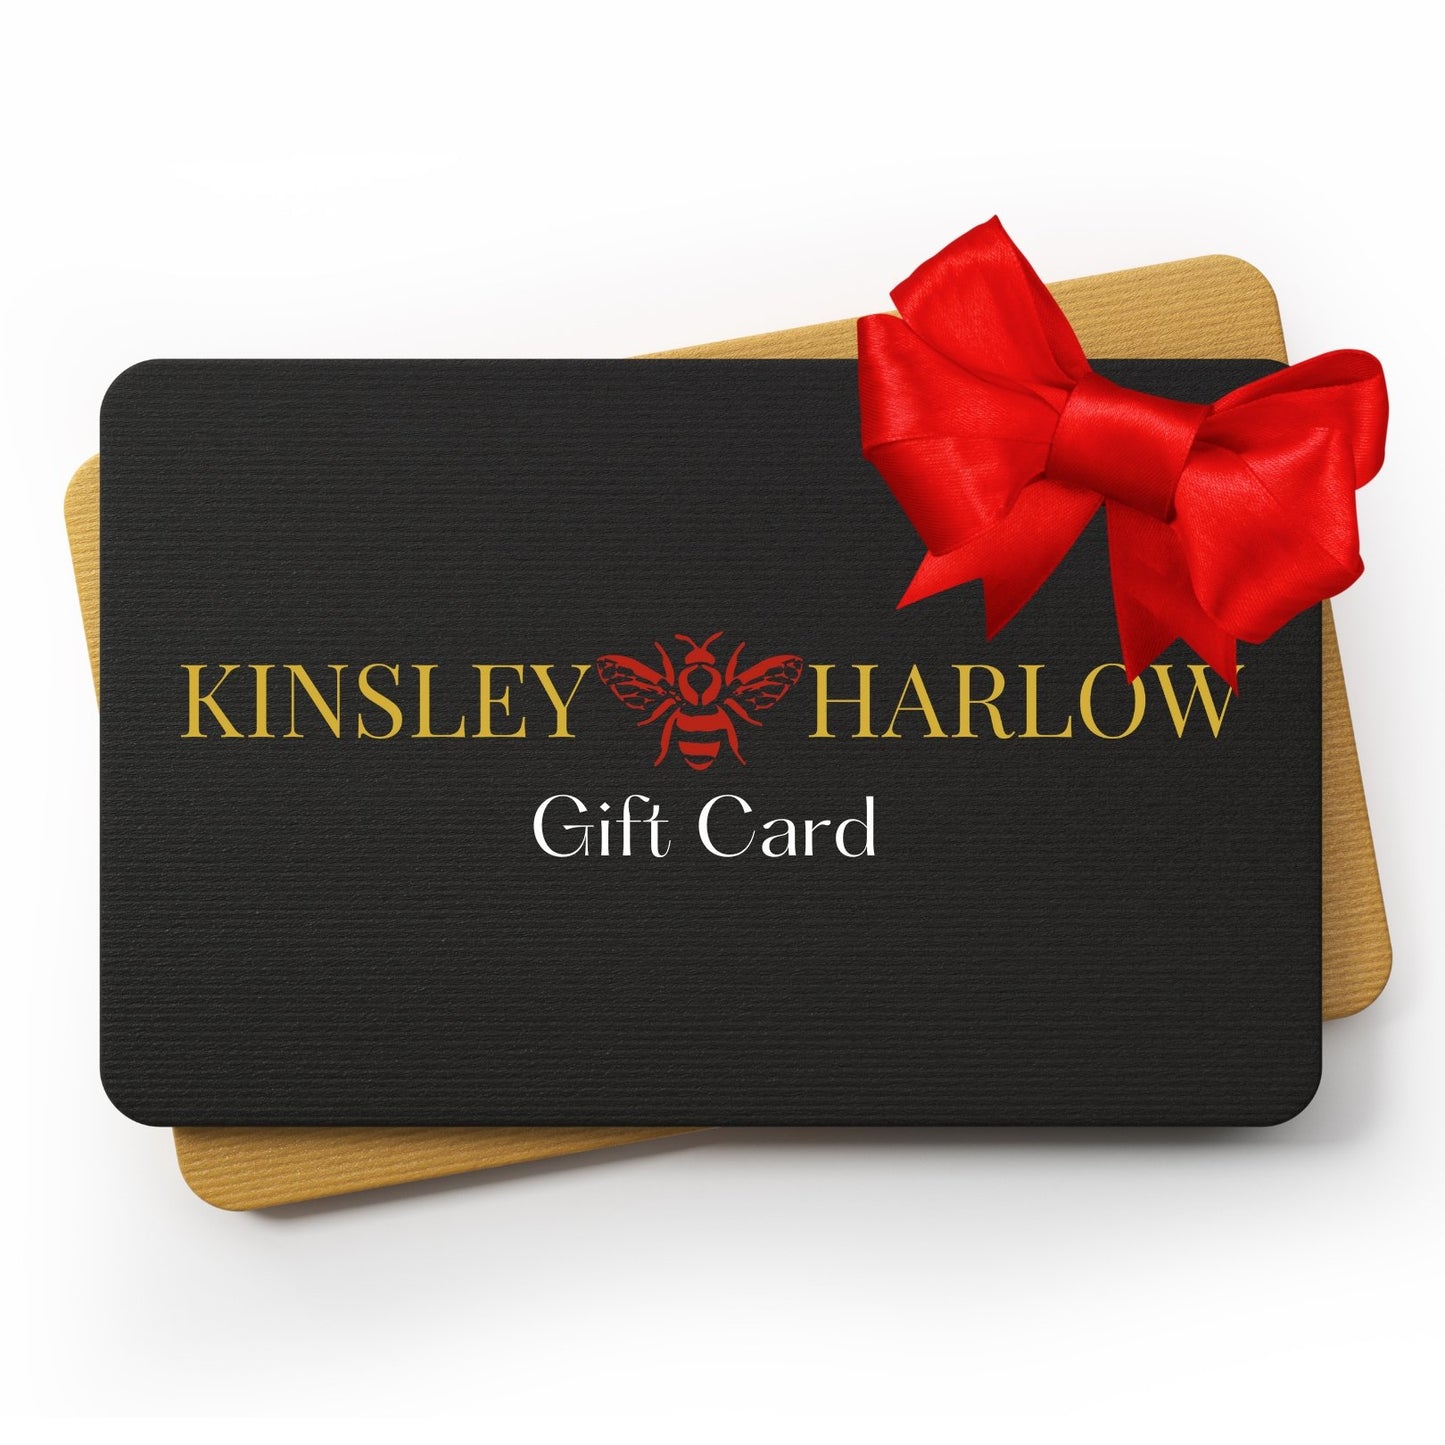 Kinsley & Harlow Gift Card - Kinsley & Harlow